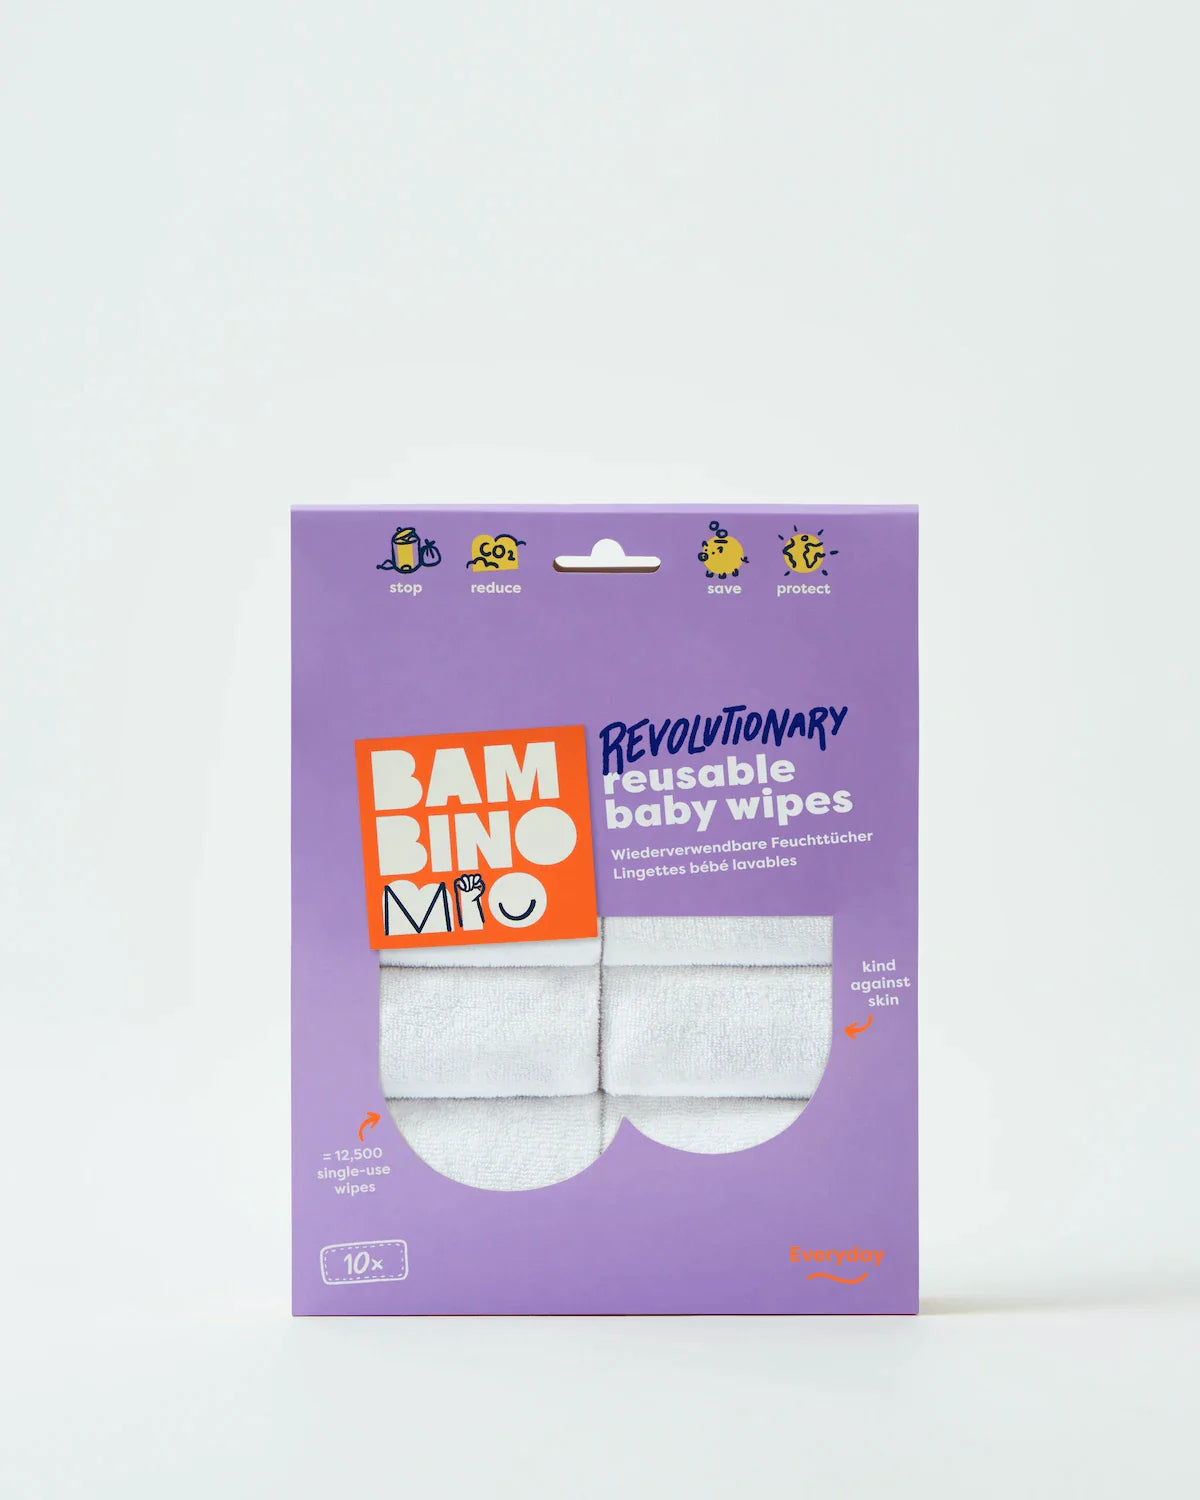 Reusable baby wipes - Everyday - Bambino Mio (UK & IE)